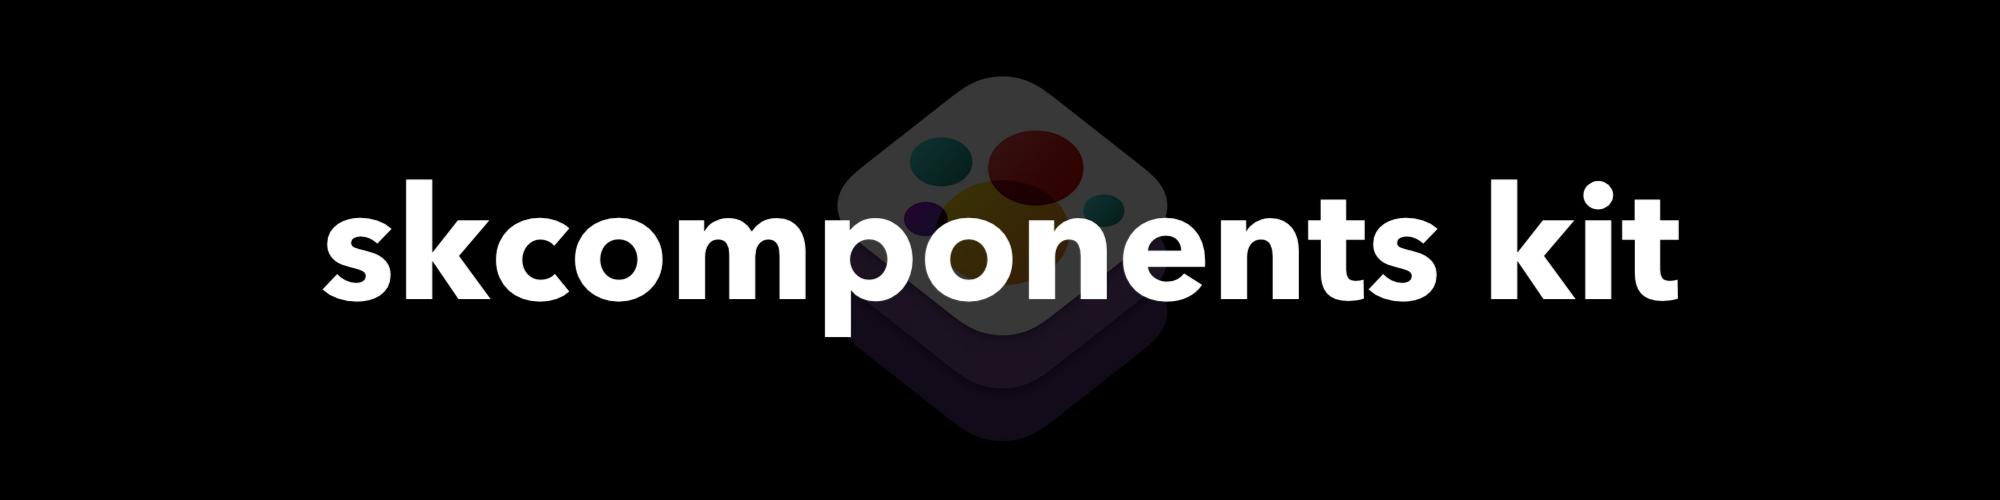 logo-skcomponents_kit.png